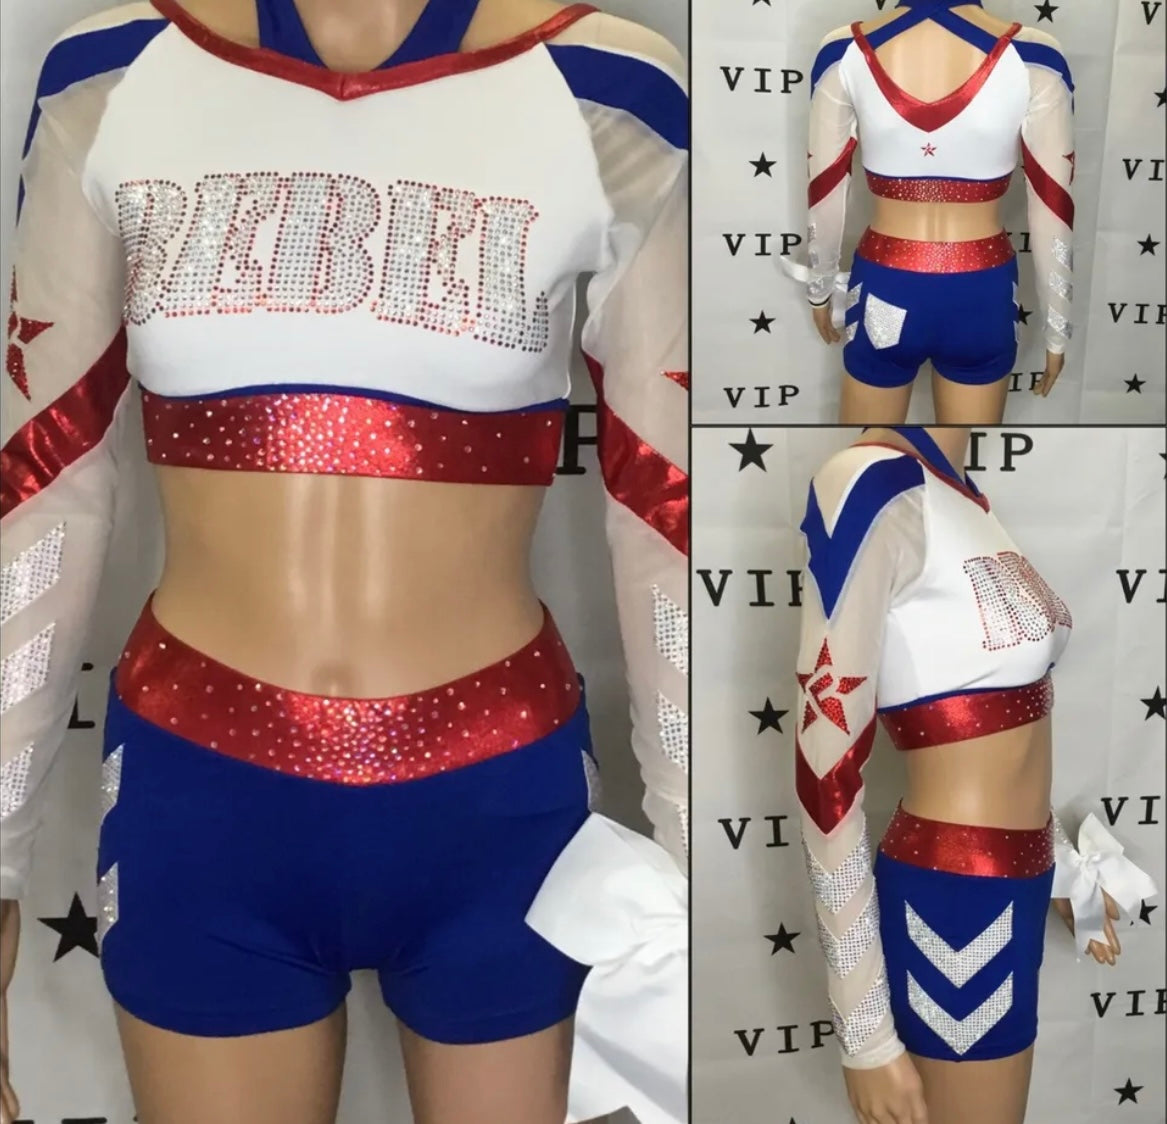 USA rebel athletic cheer uniform